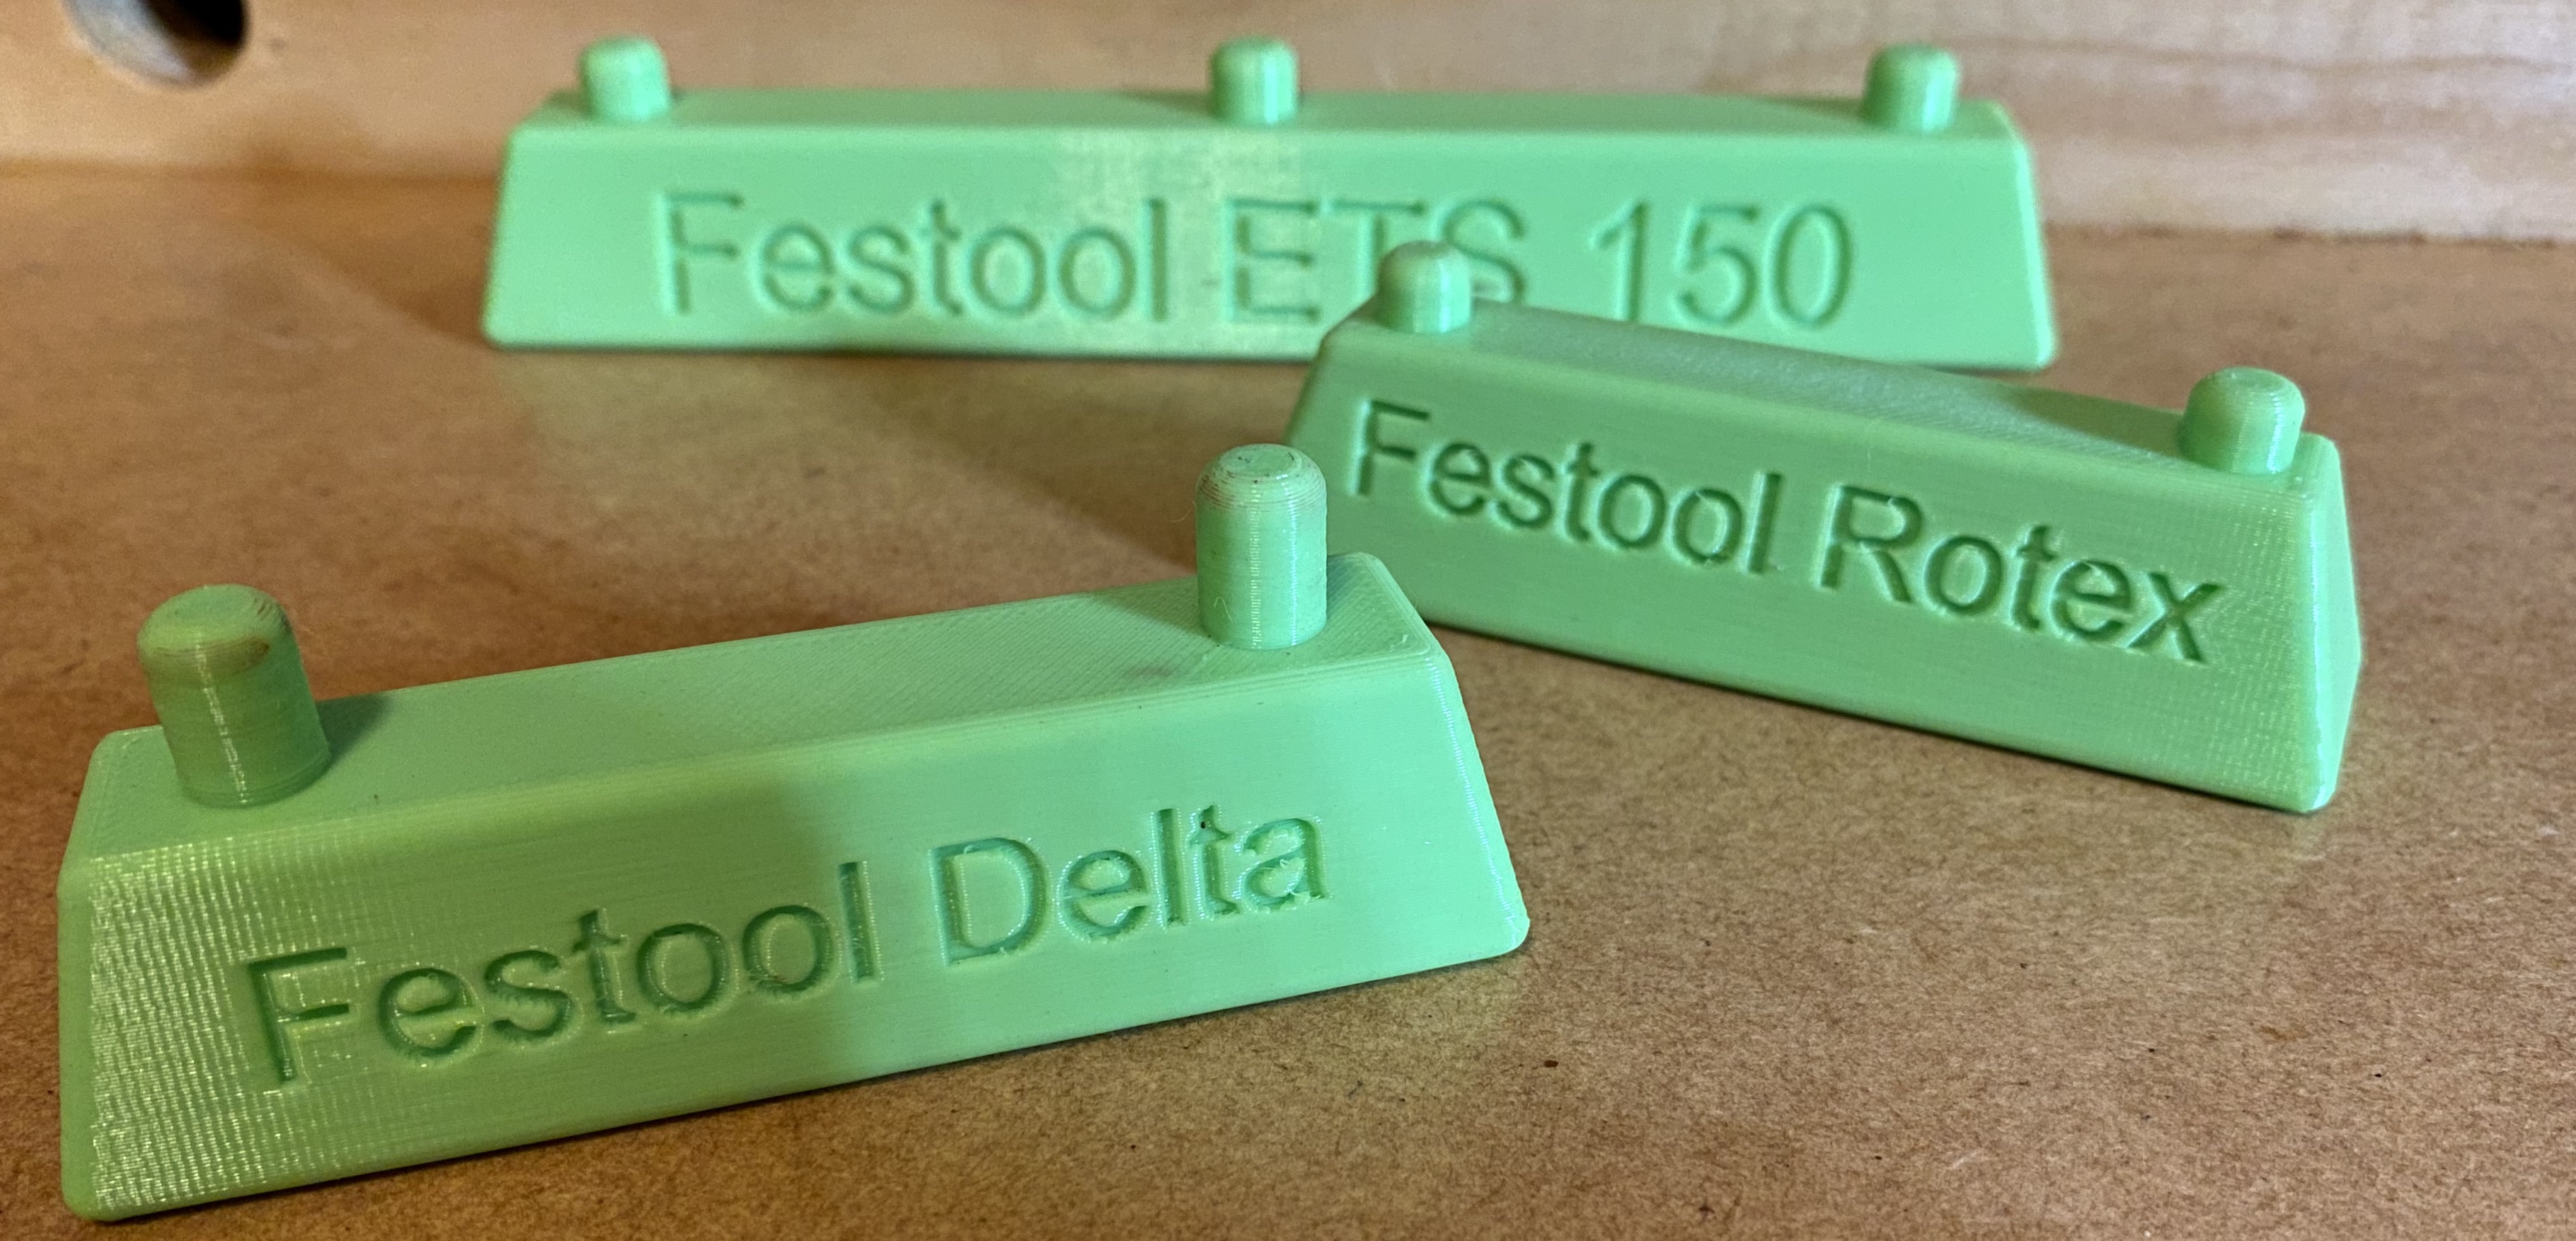 Festool sander disk alignment tools